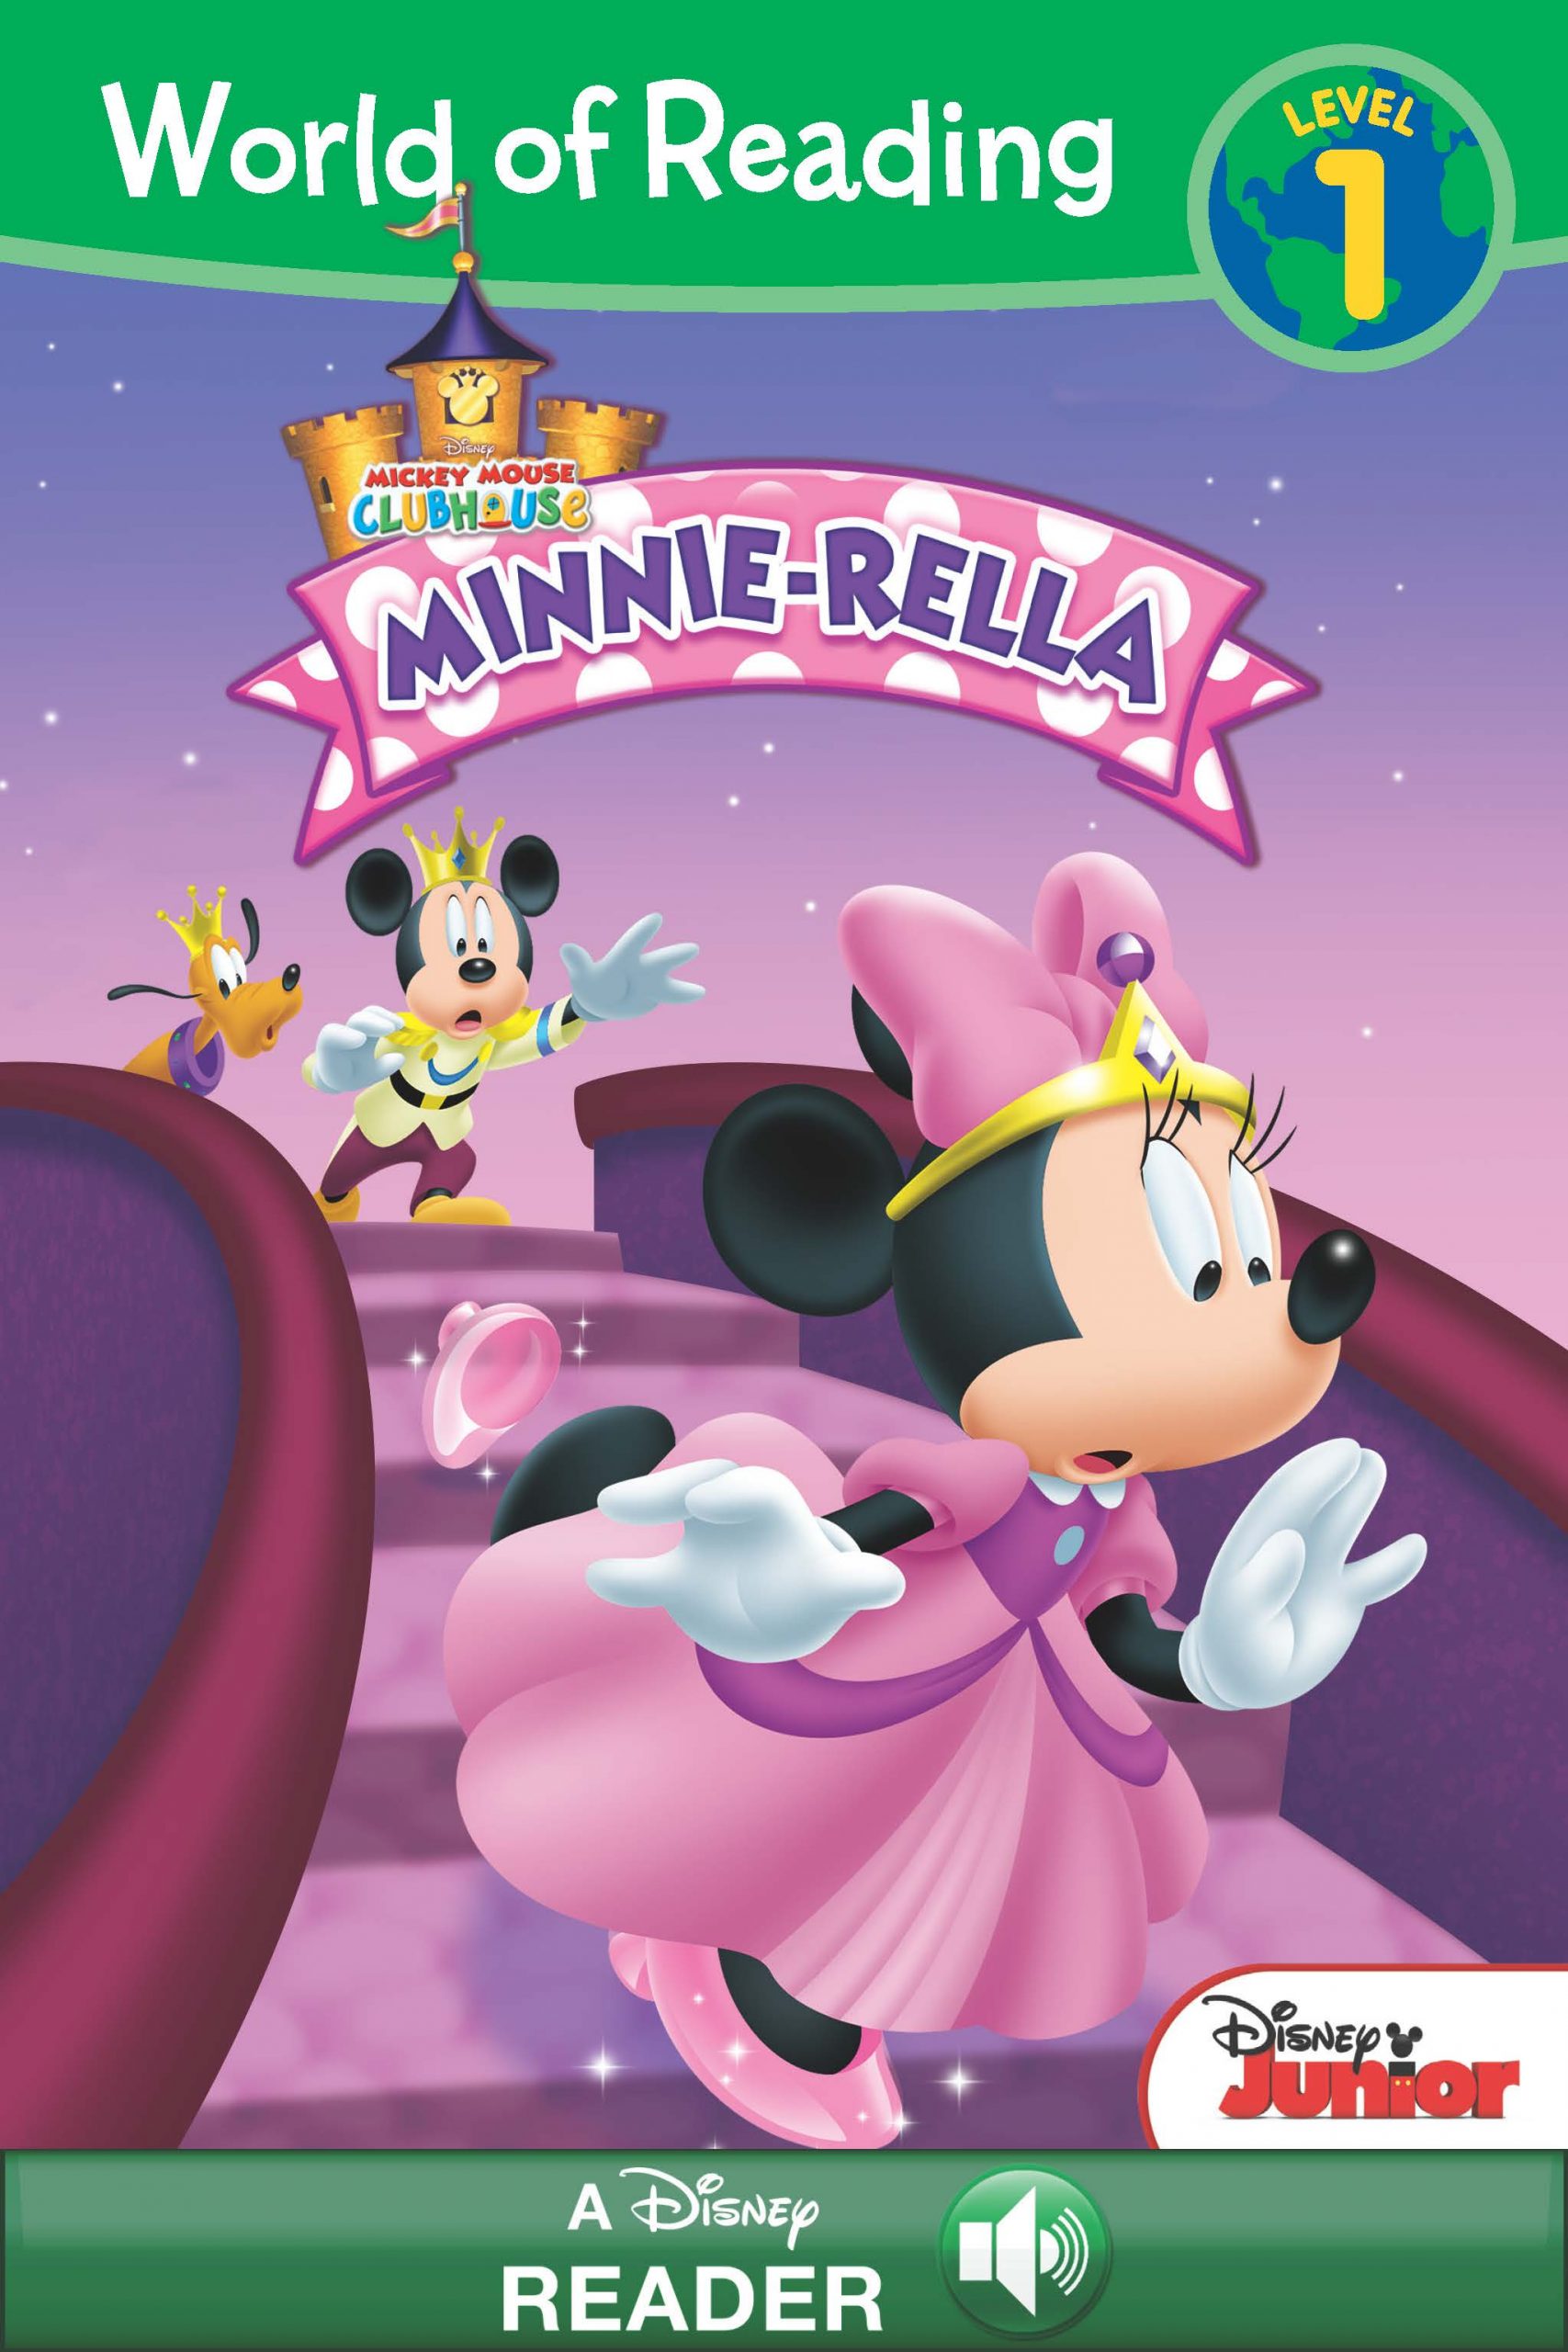 Minnie-rella A Read-Along eBook (Level 1) by Lisa Ann Marsoli